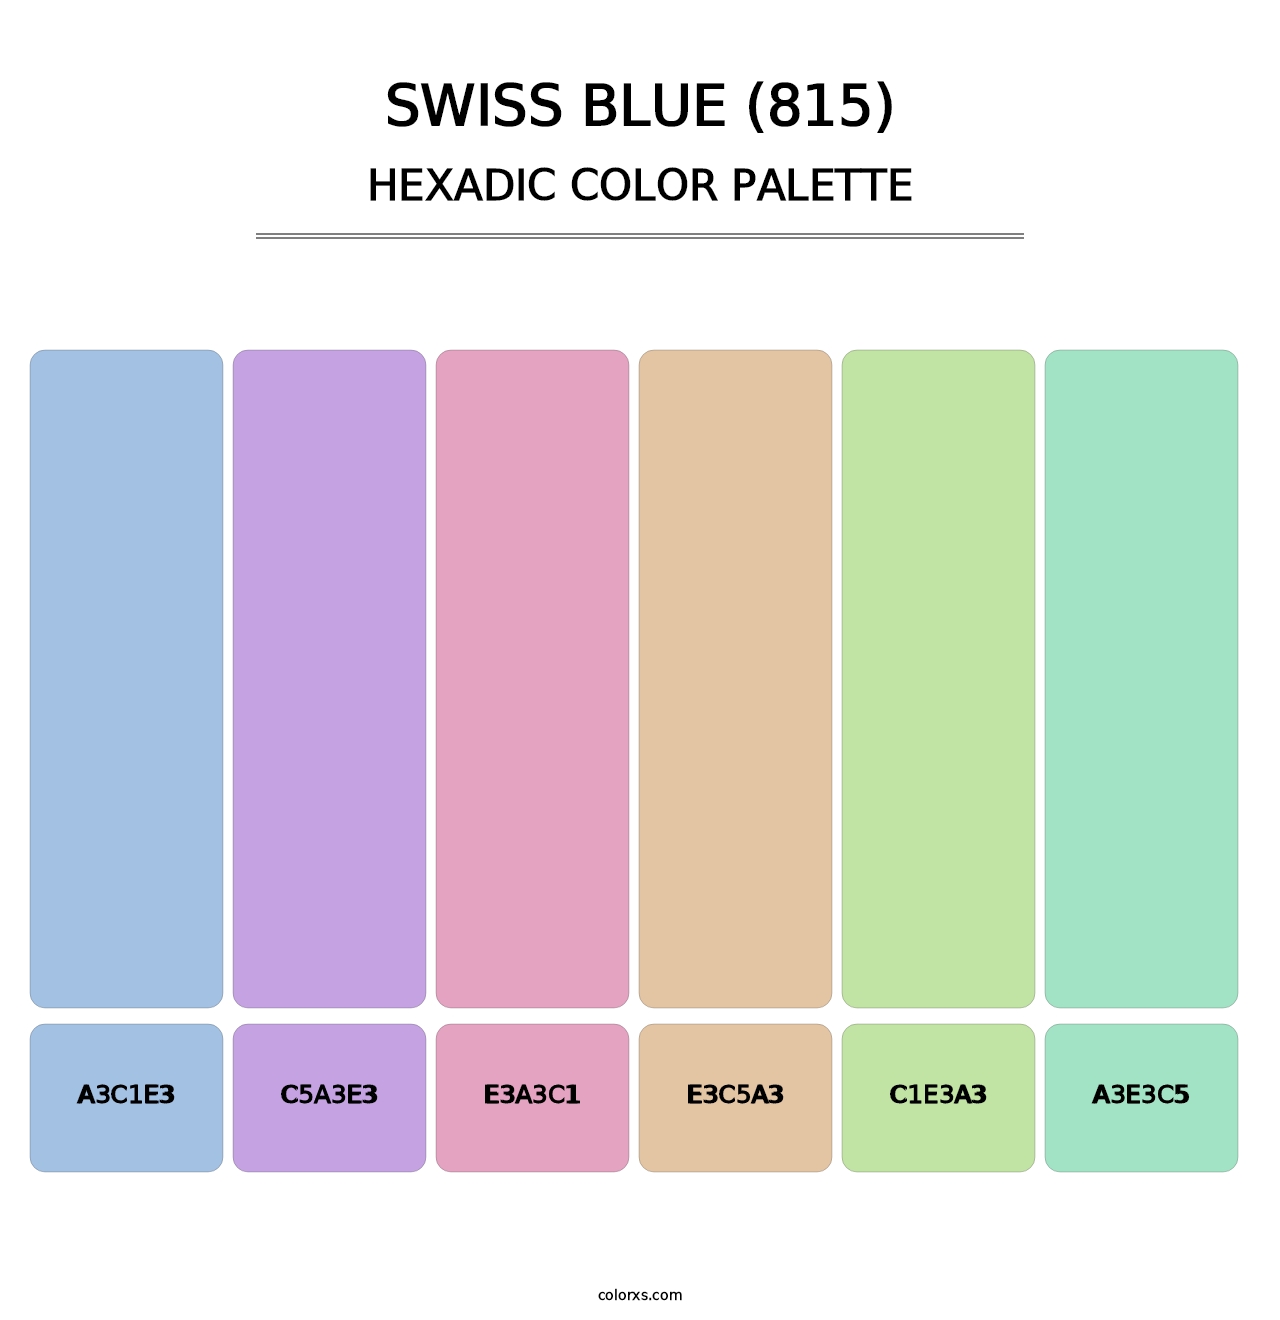 Swiss Blue (815) - Hexadic Color Palette